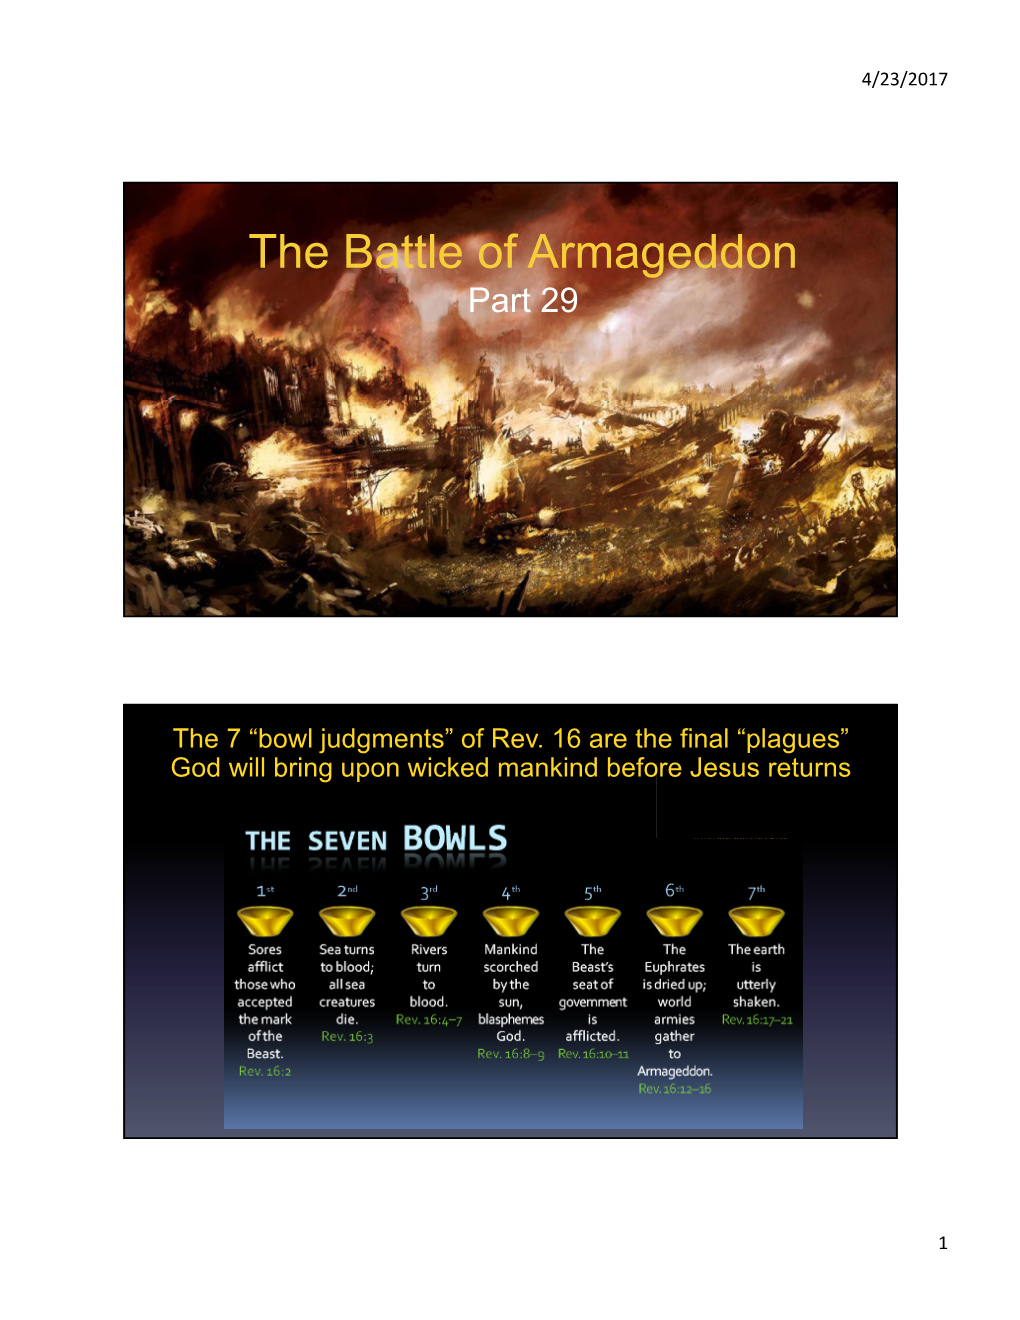 The Battle of Armageddon Part 29